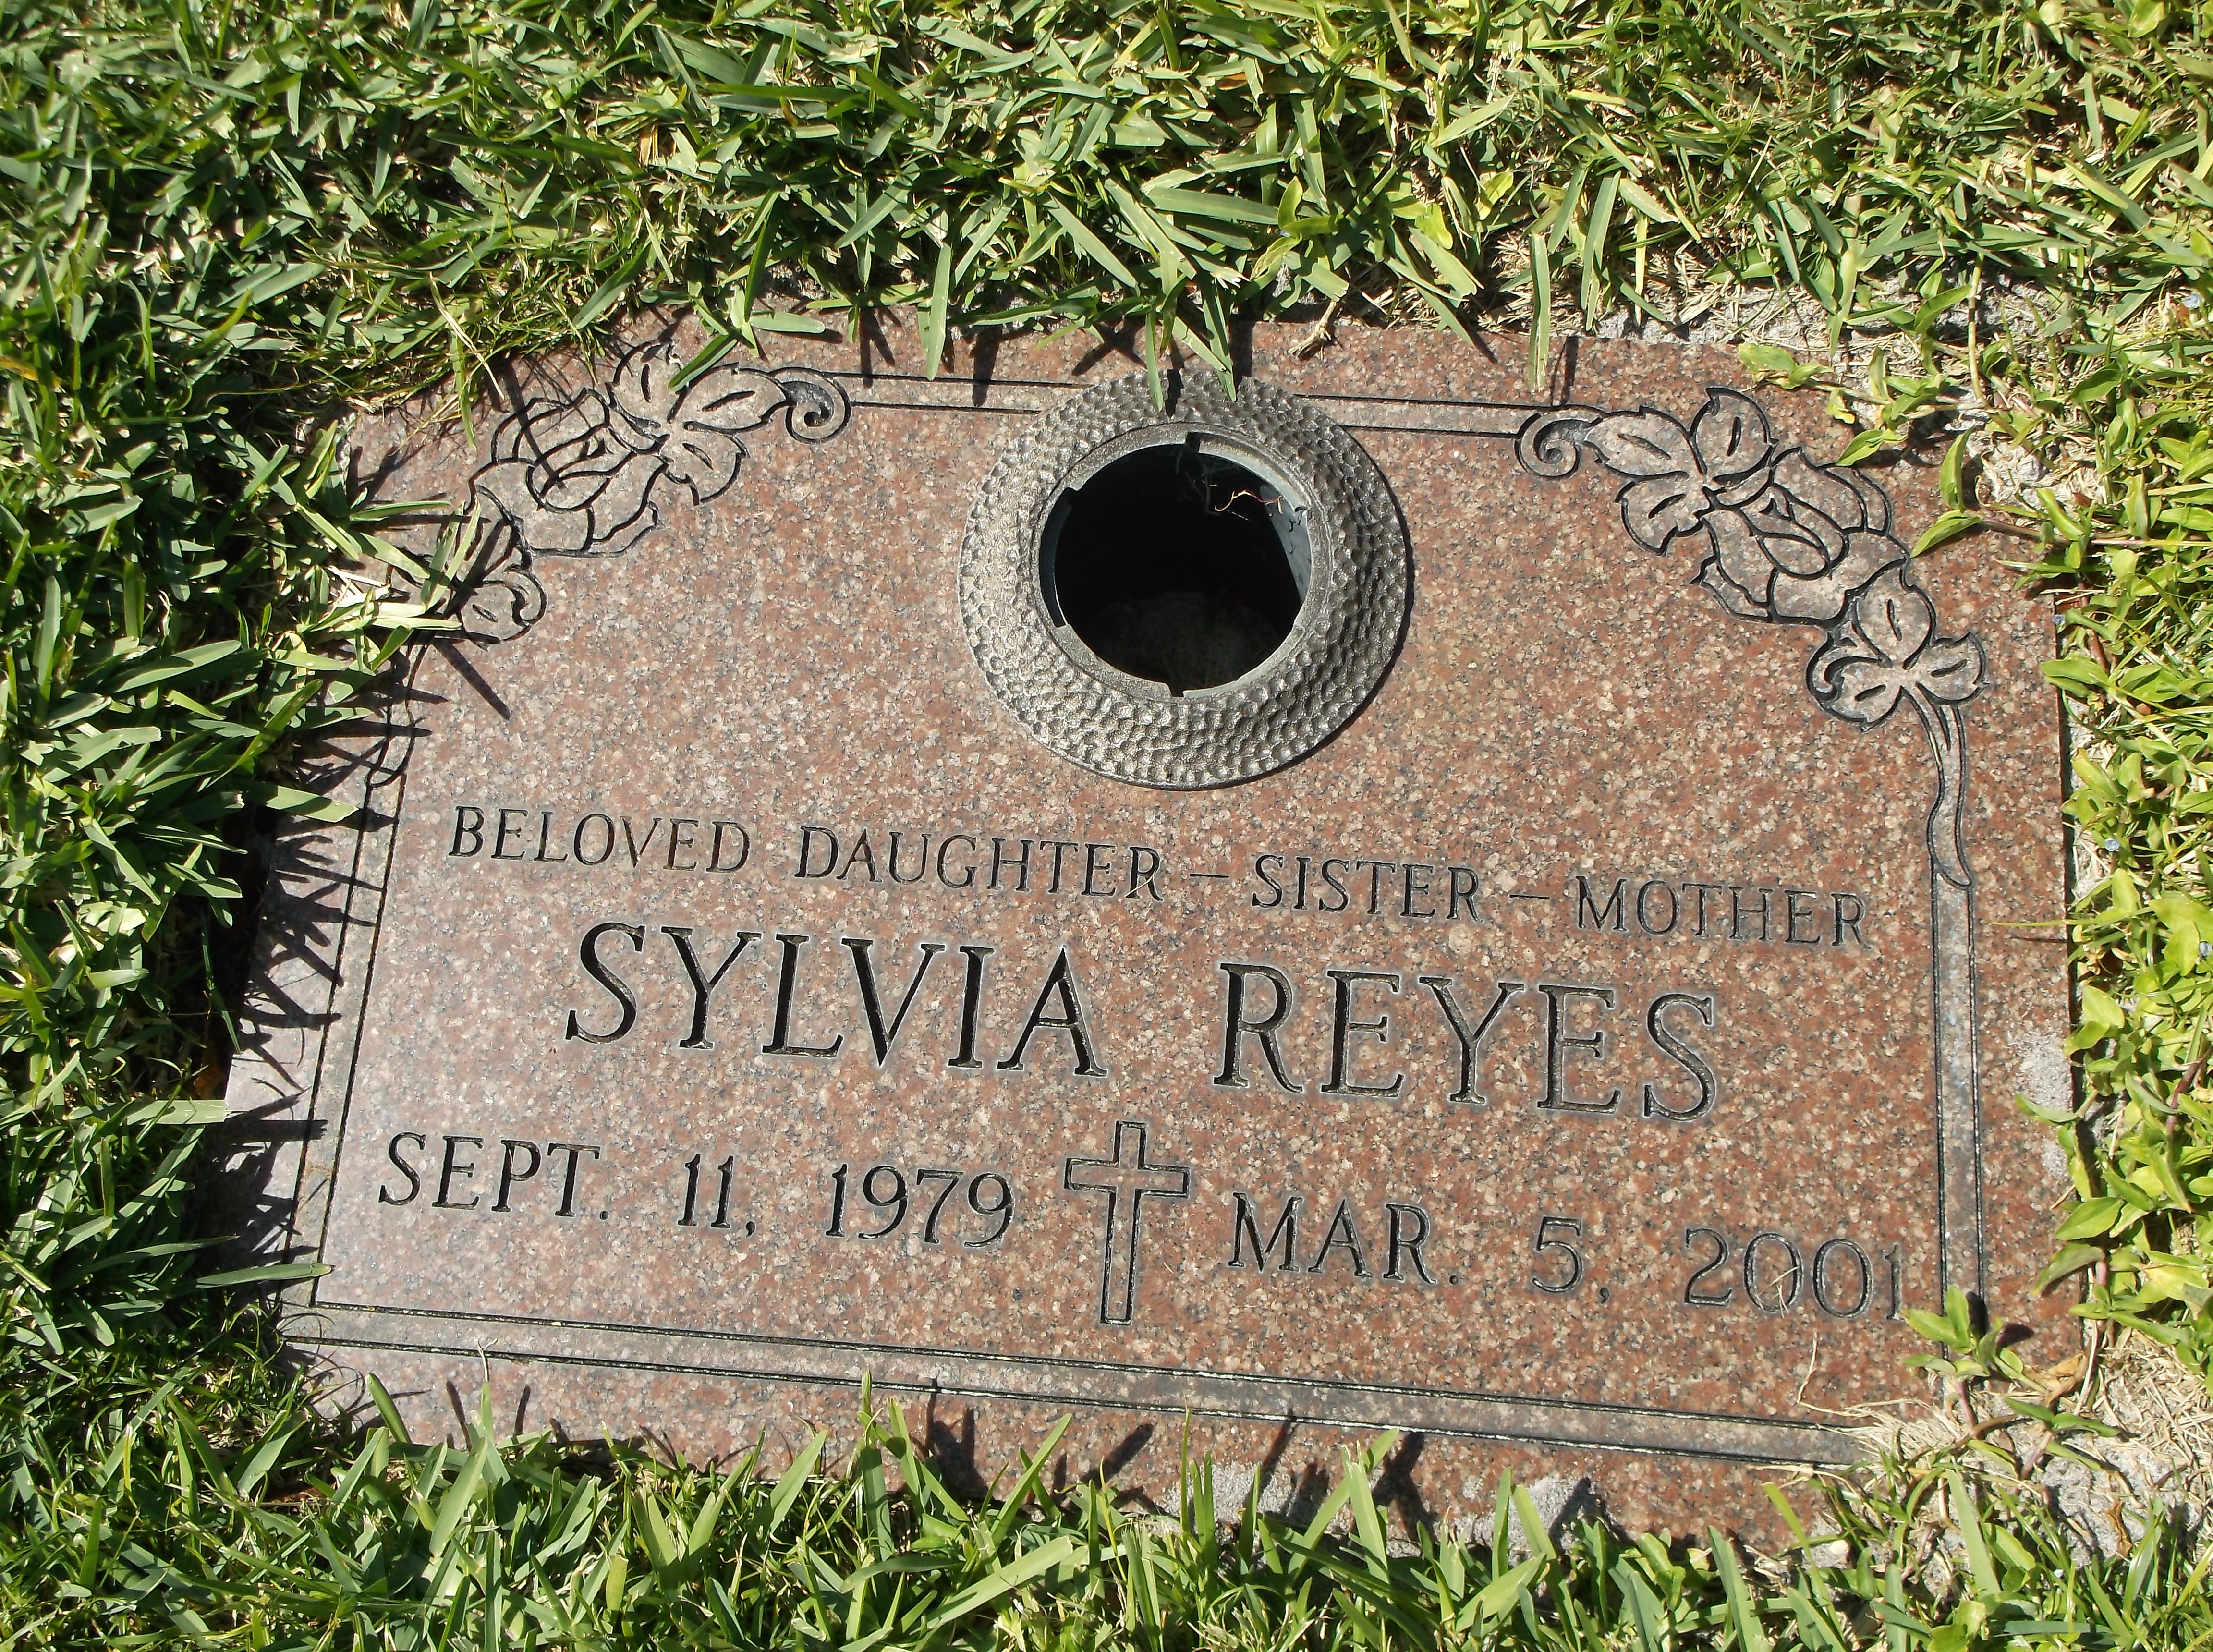 Sylvia Reyes